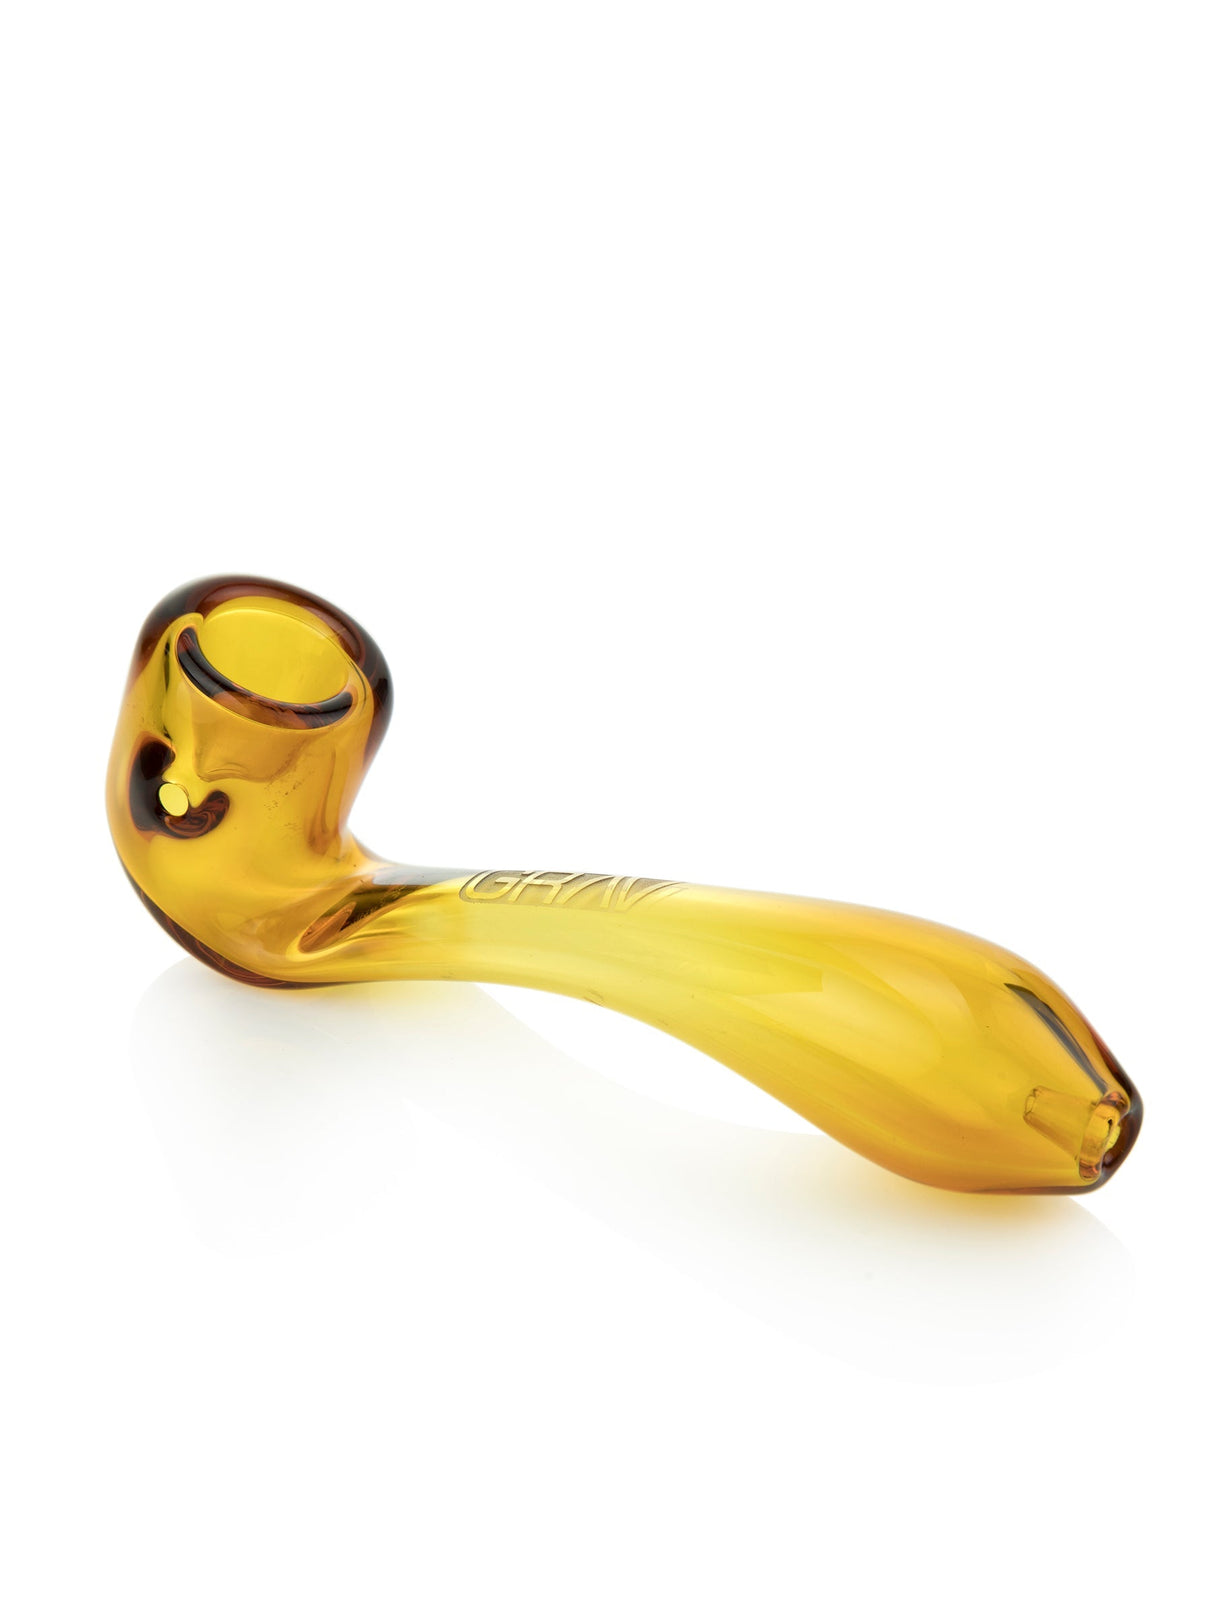 GRAV Large Sherlock Hand Pipe in Amber, 6" Long, Portable Borosilicate Glass, Side View